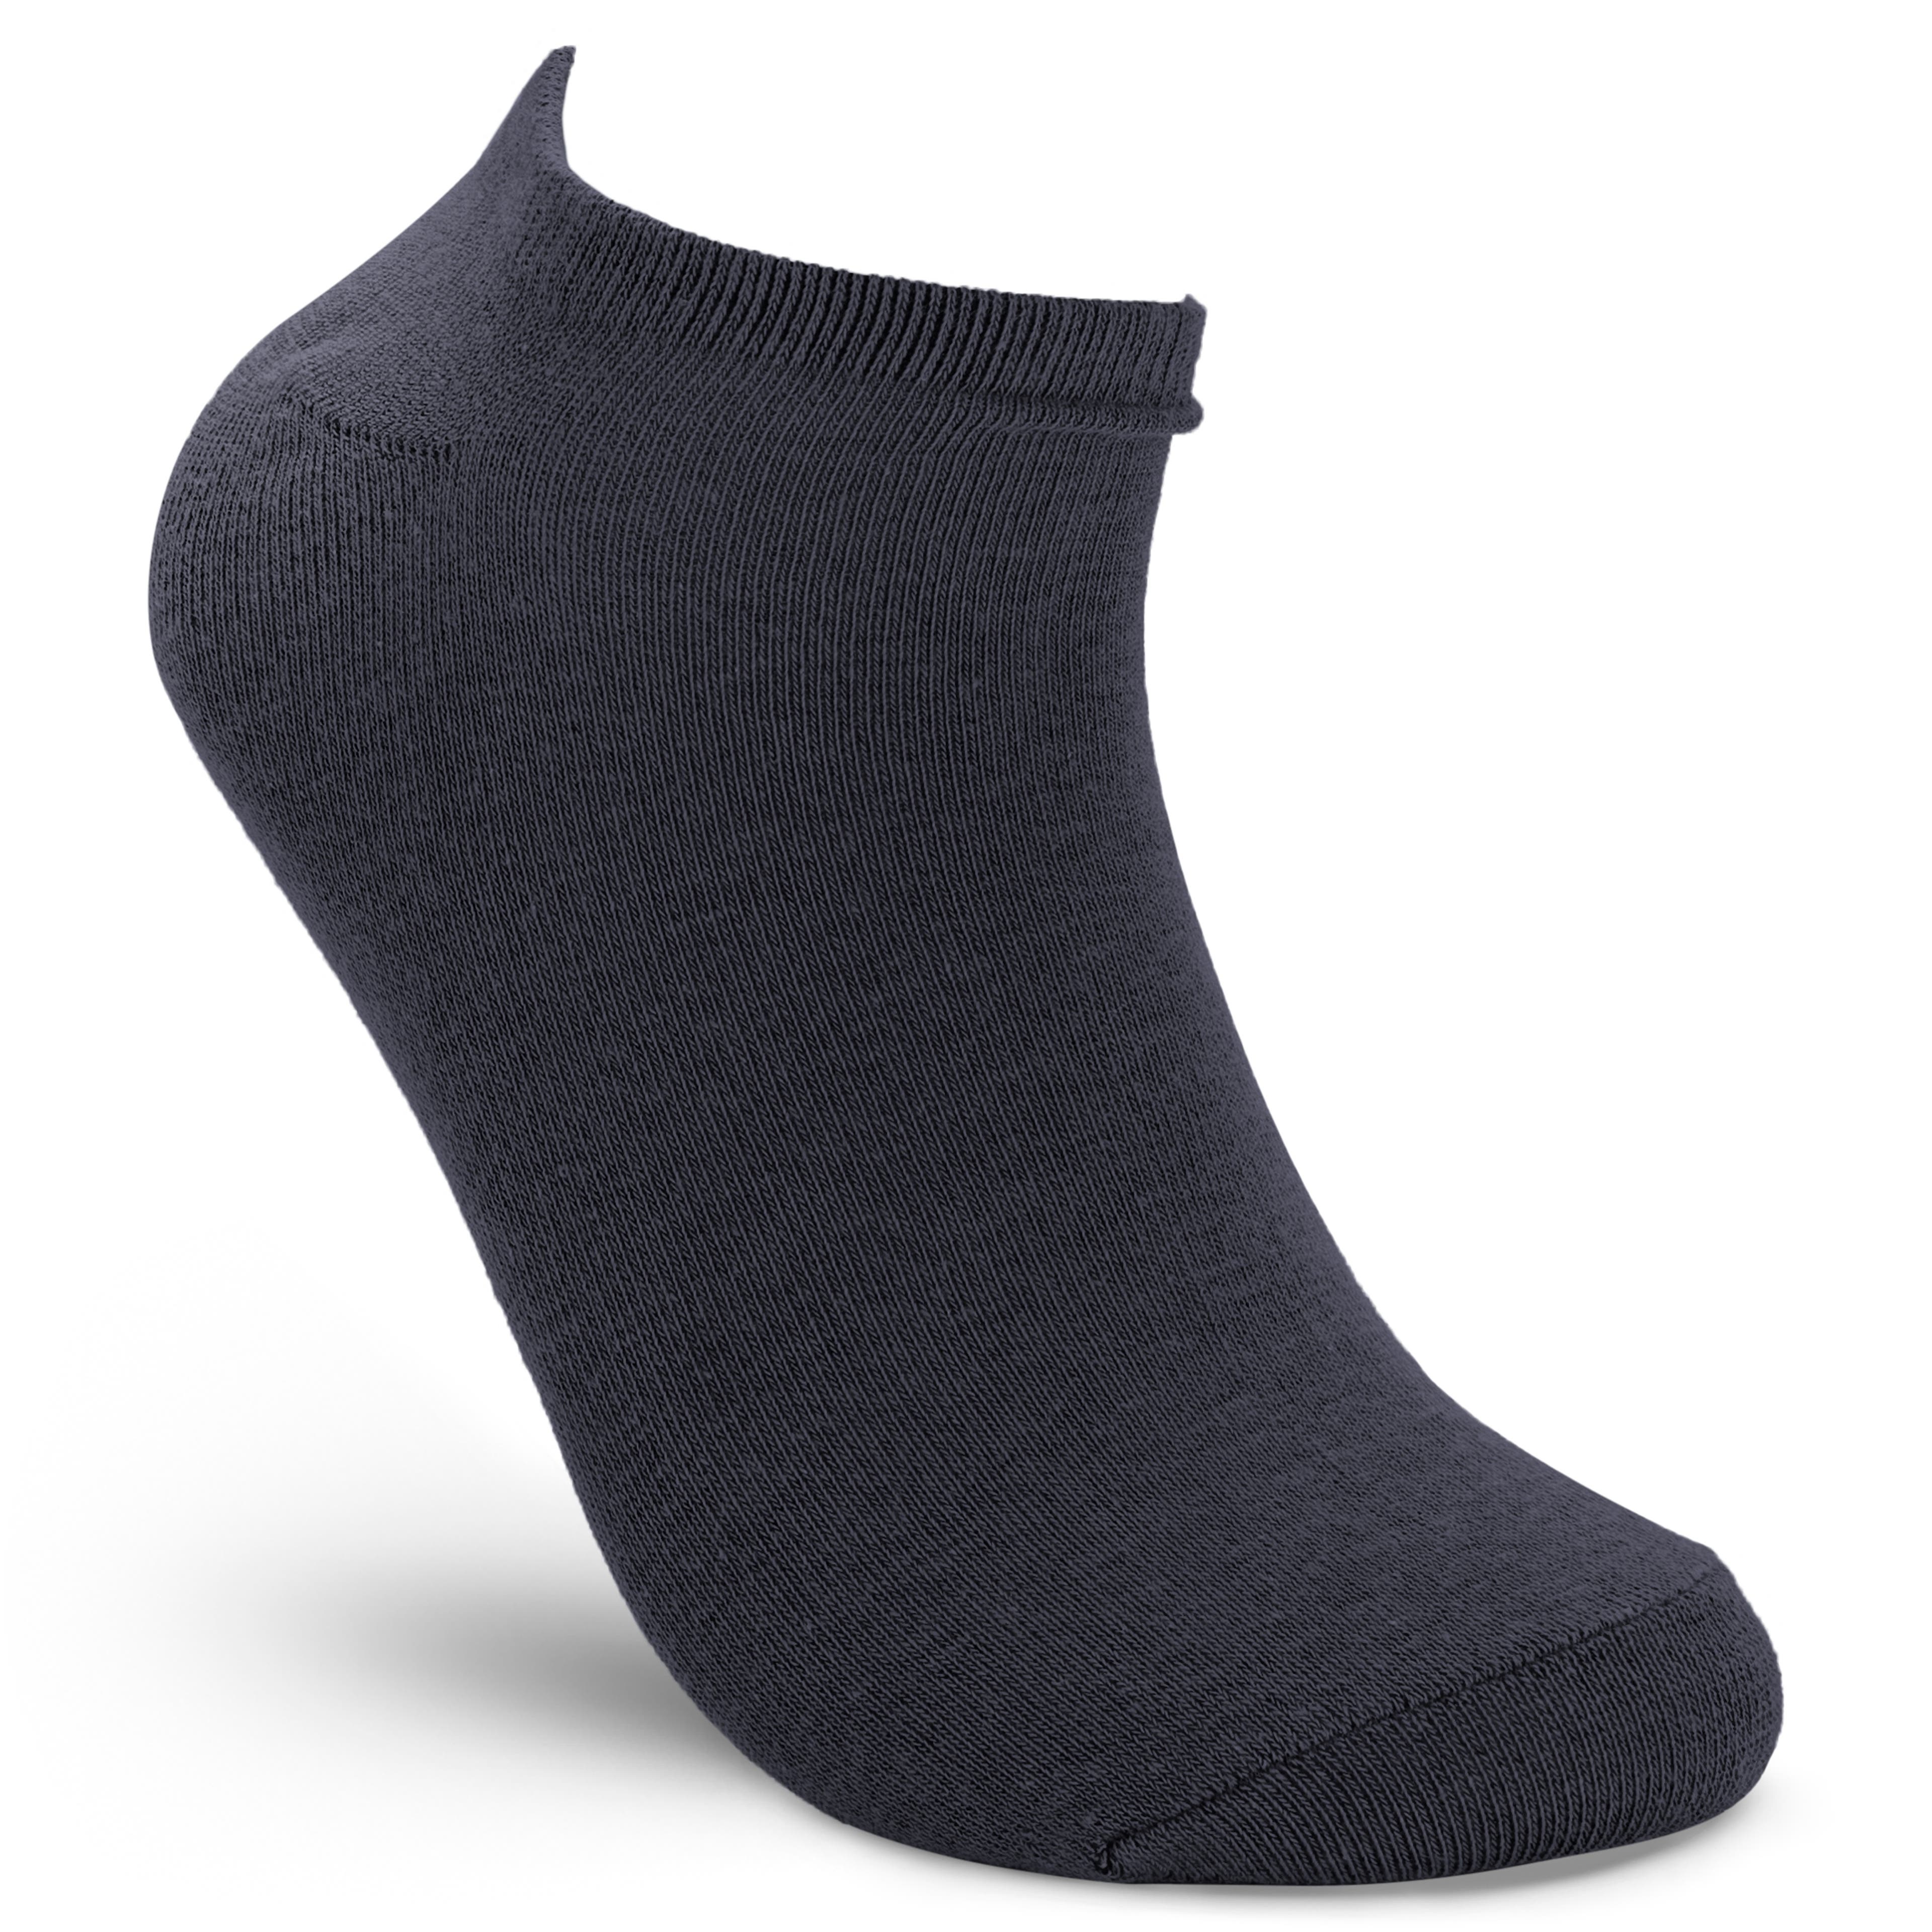 Magnus | Graphit Knöchel-Socken